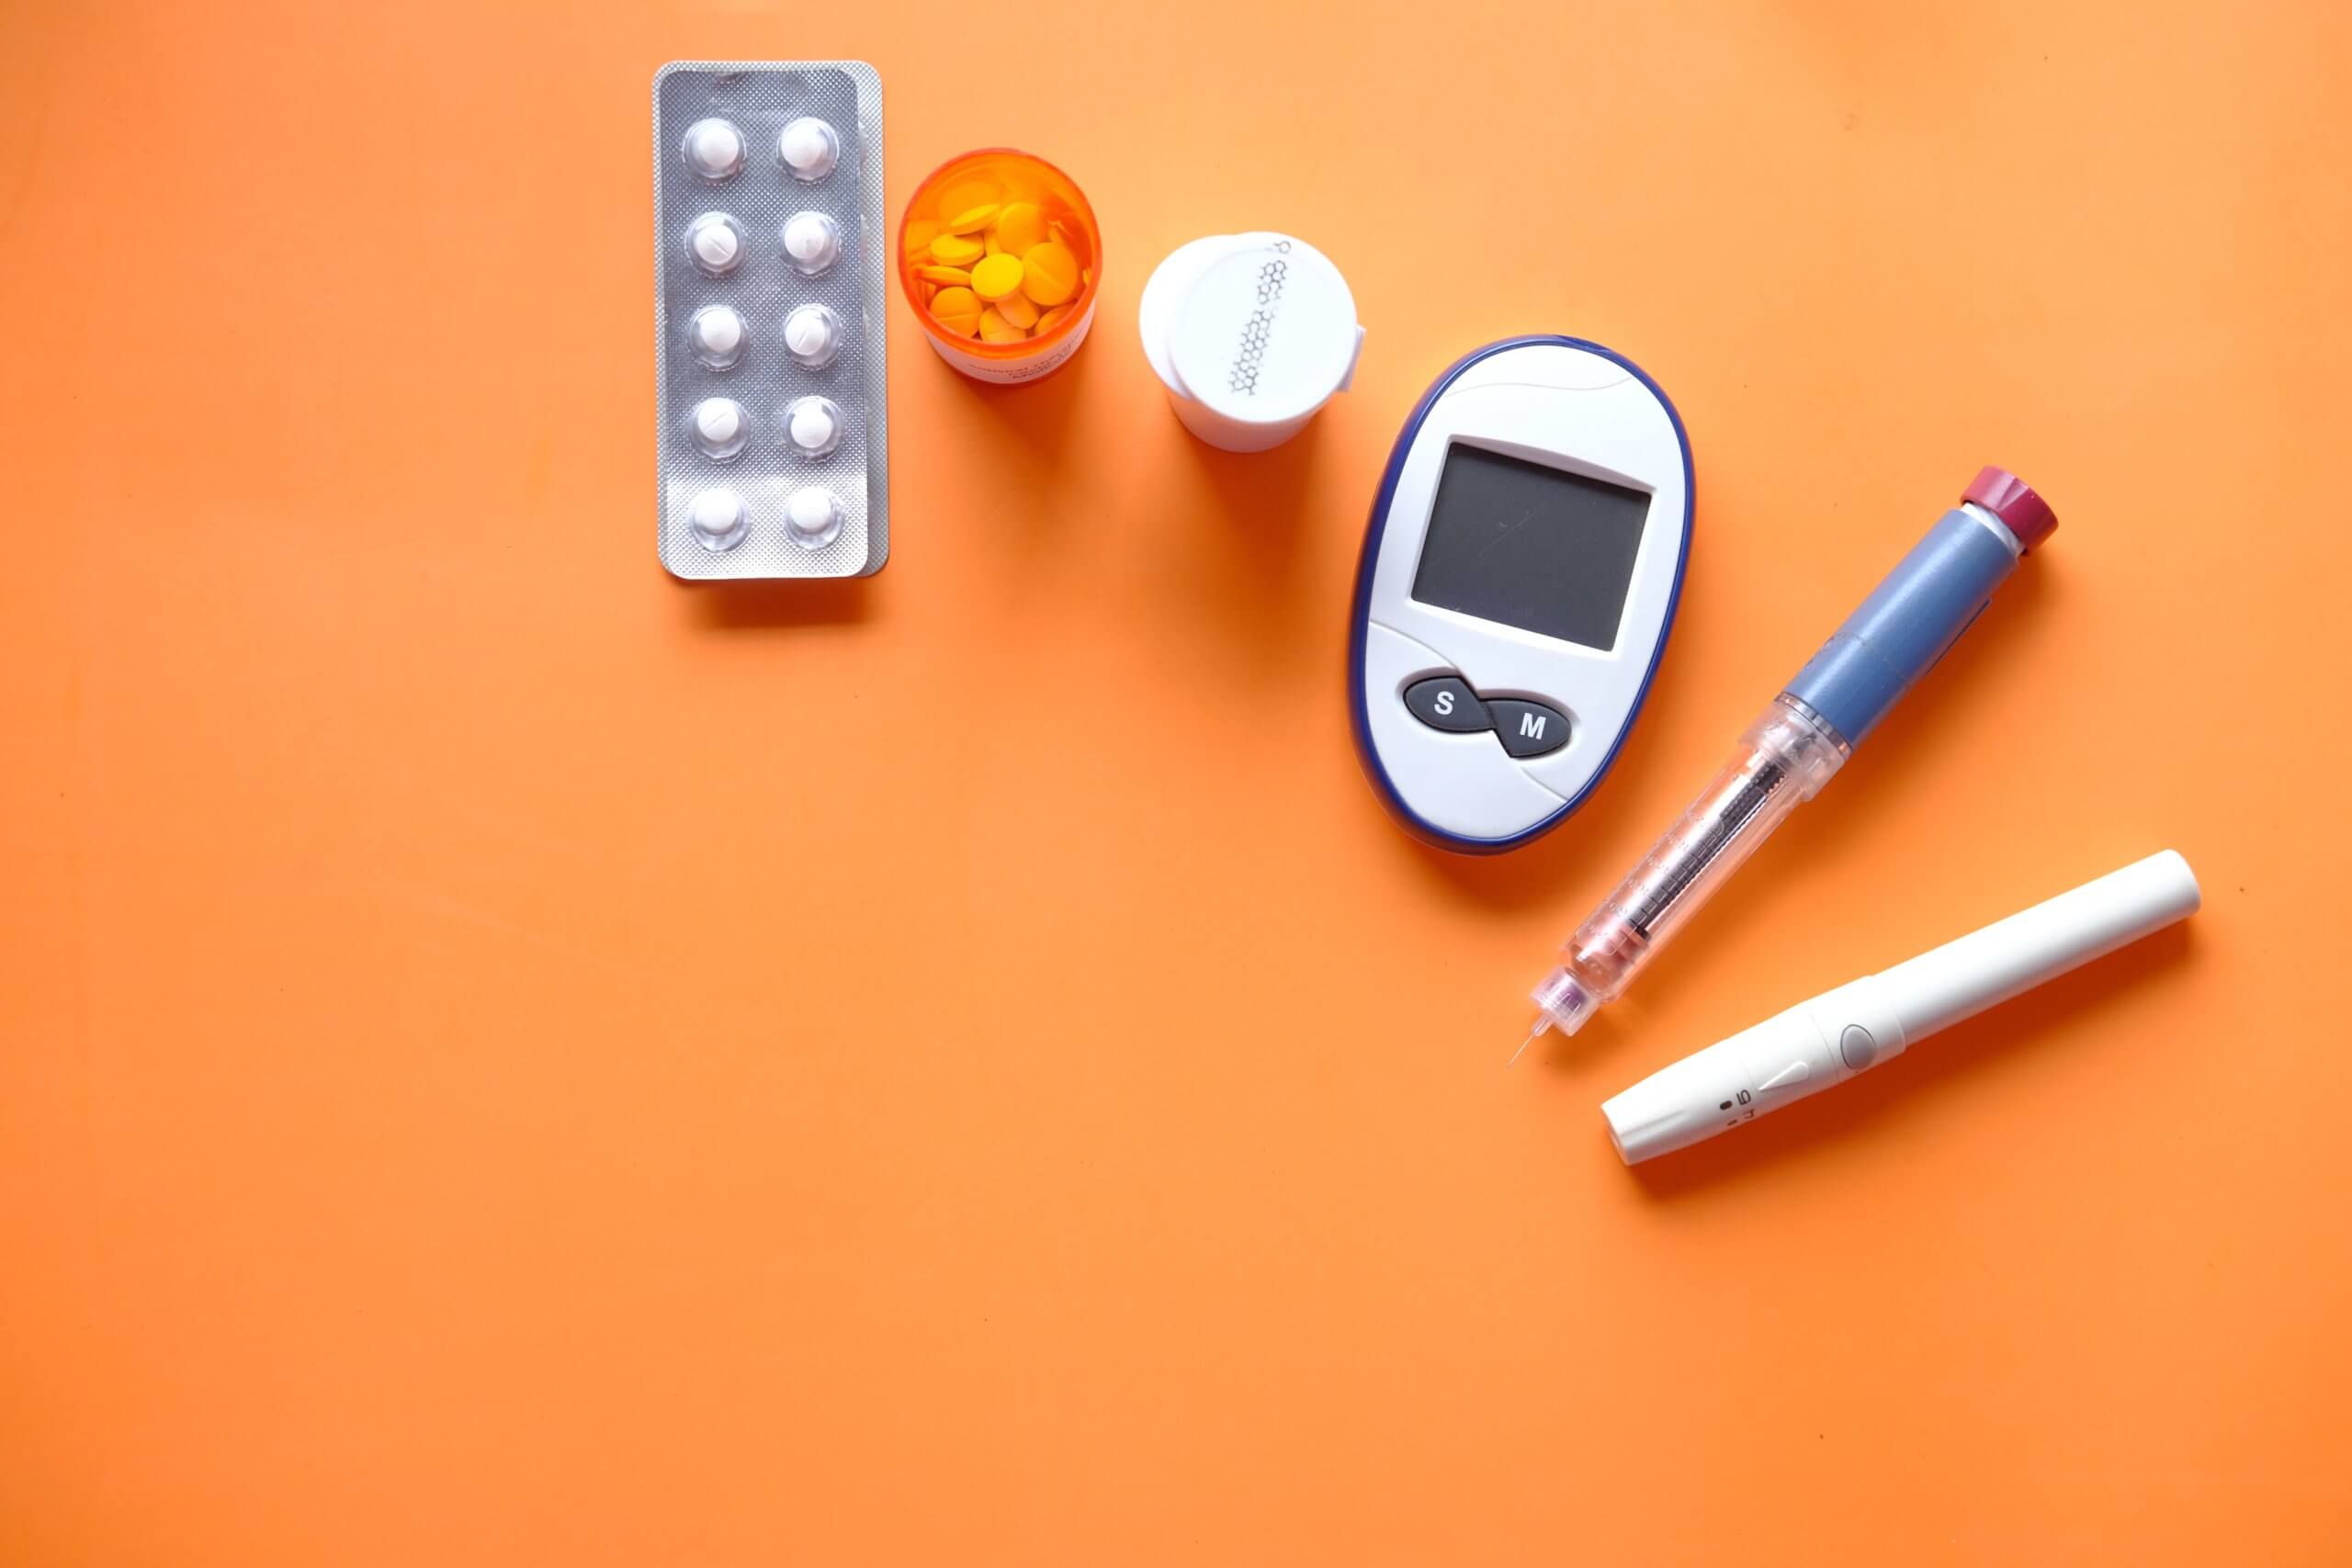 Insulin pen, diabetes measurement tools and pills on orange background